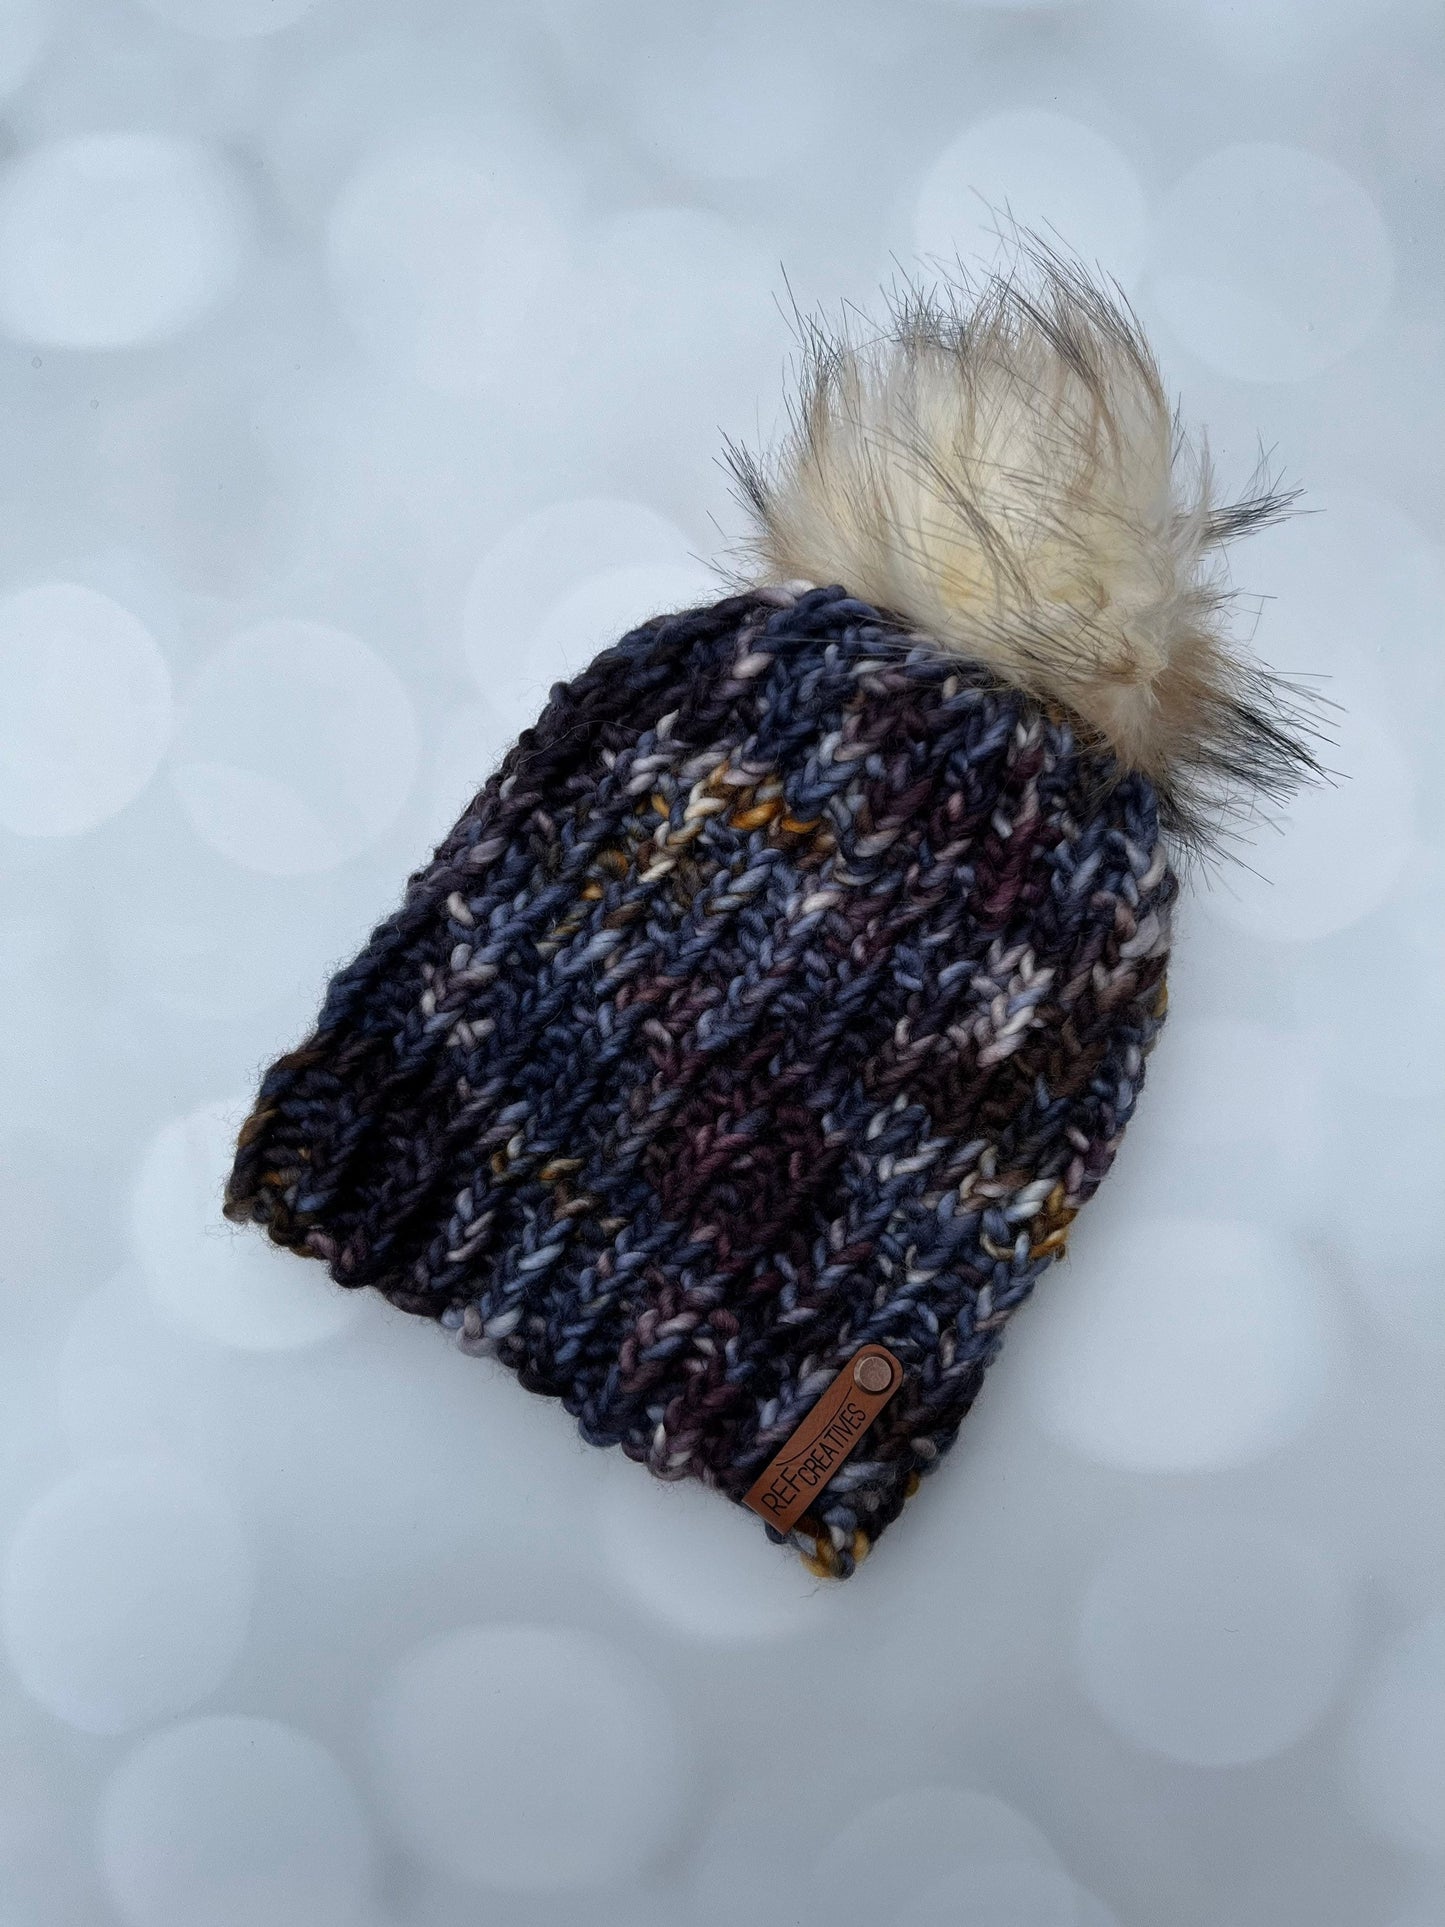 Luxury Blue Merino Wool Knit Hat - Dark Fall Tones Theo Beanie Hand Knit Hat with Hand Dyed Yarn